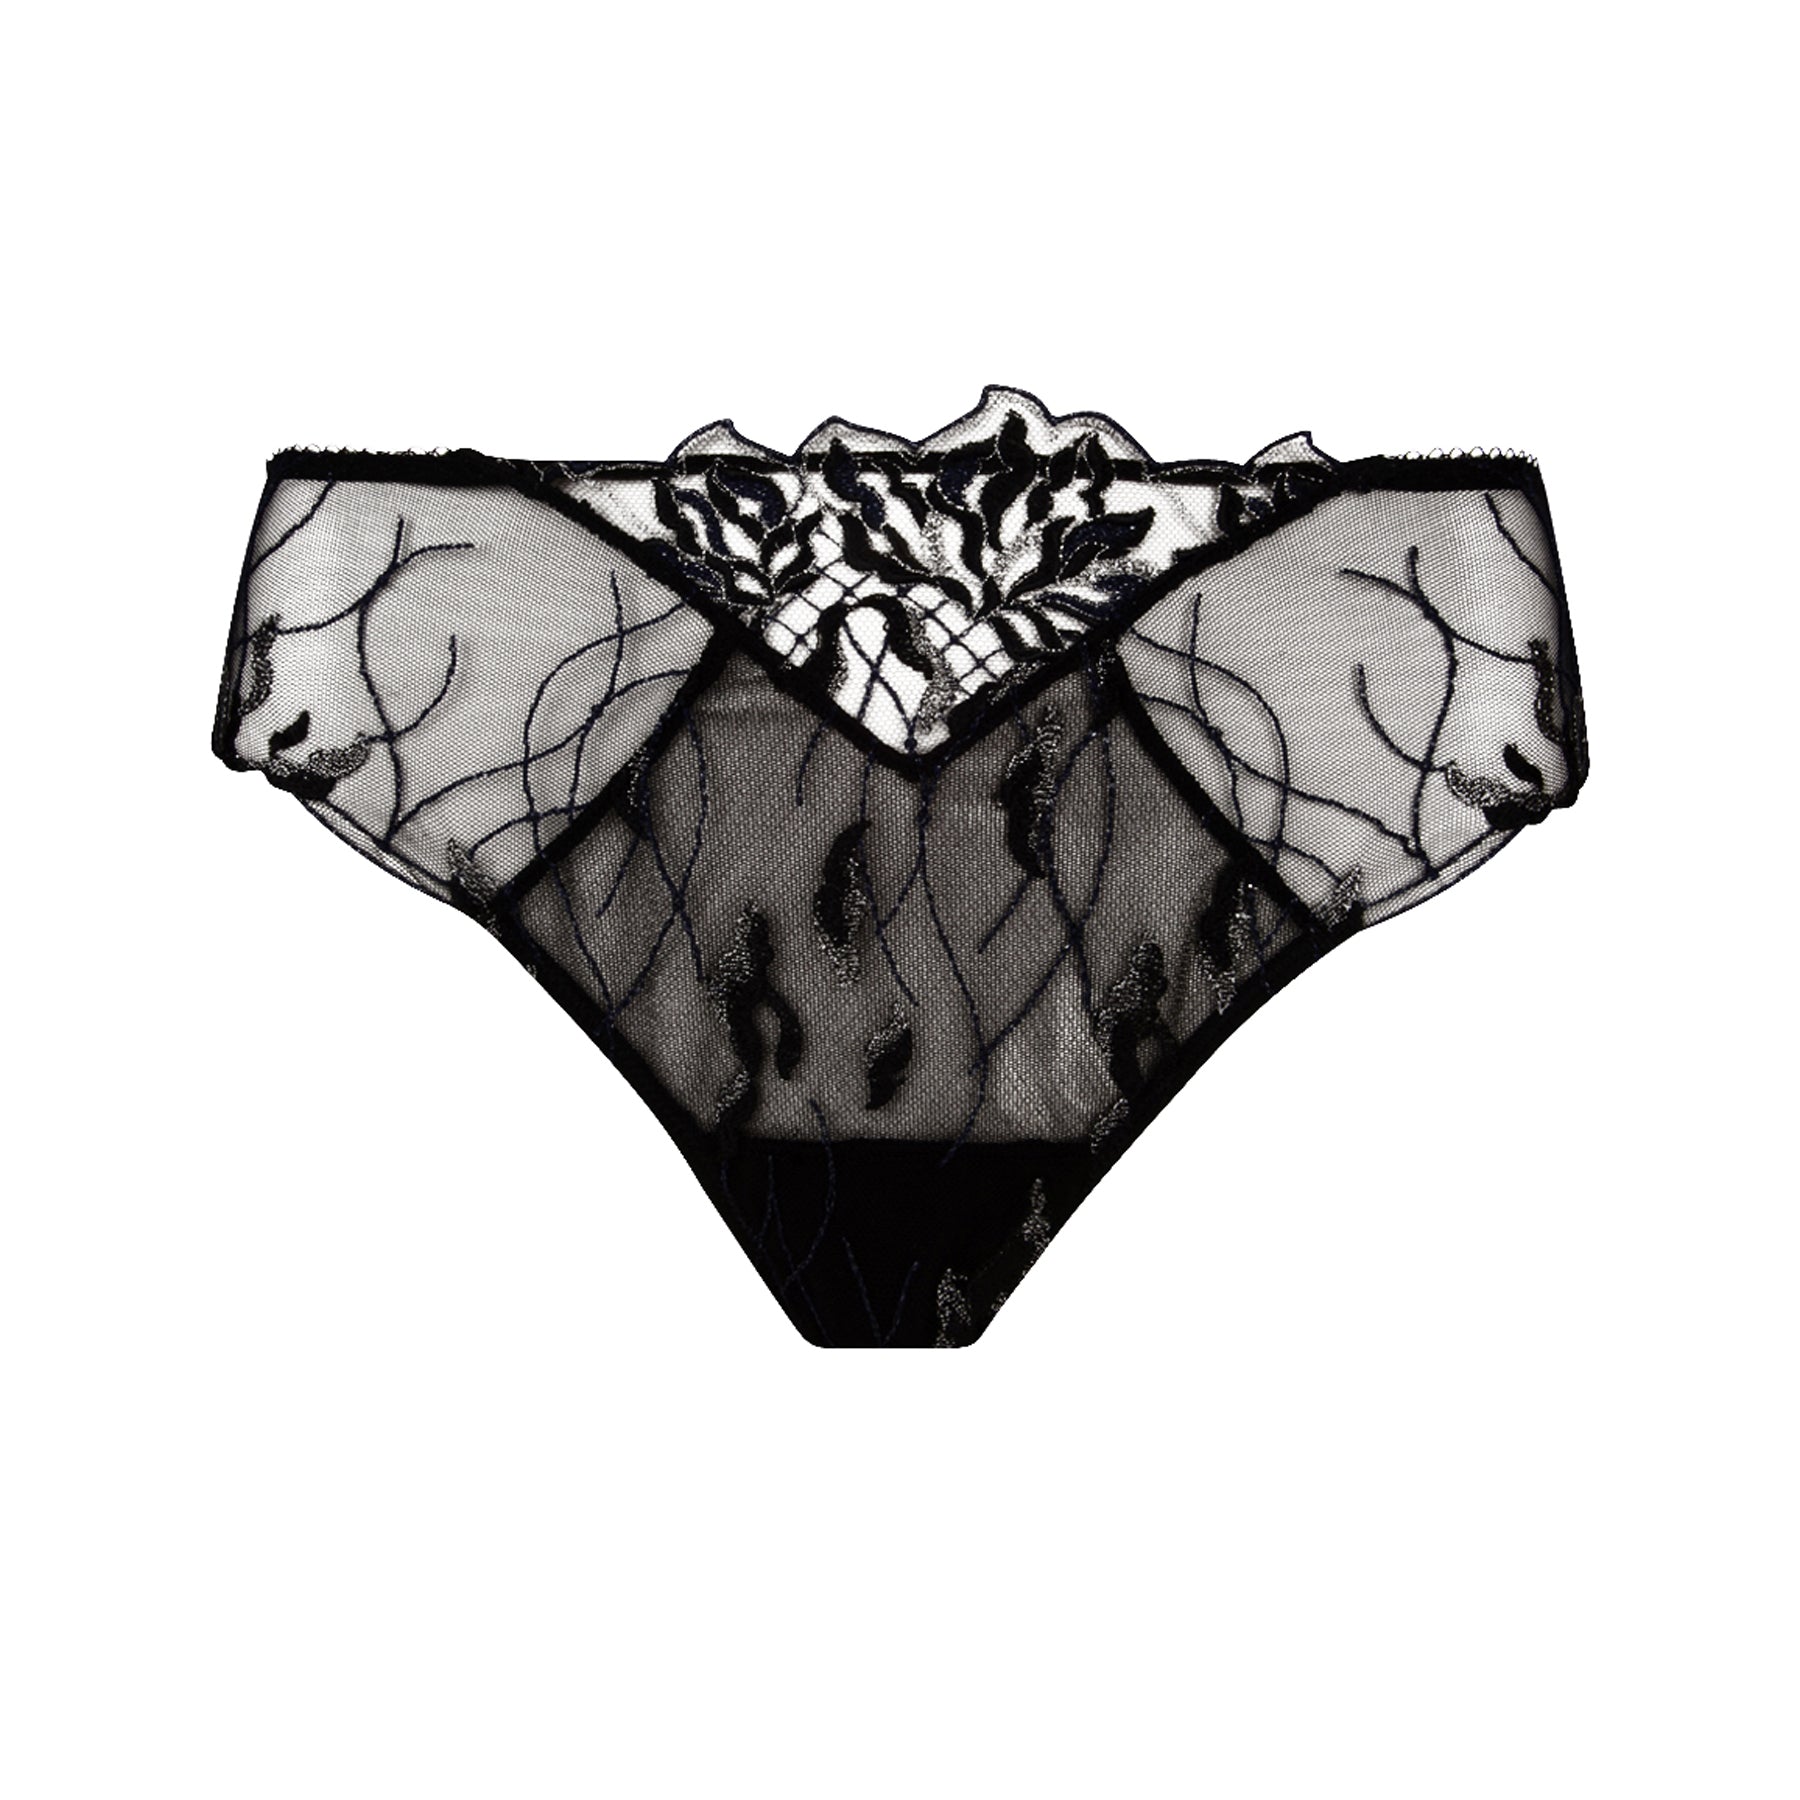 Lace Fasion Women Sensuality Hollow Underwear Underpant plus Size Lingerie  for Women 4x Christmas 